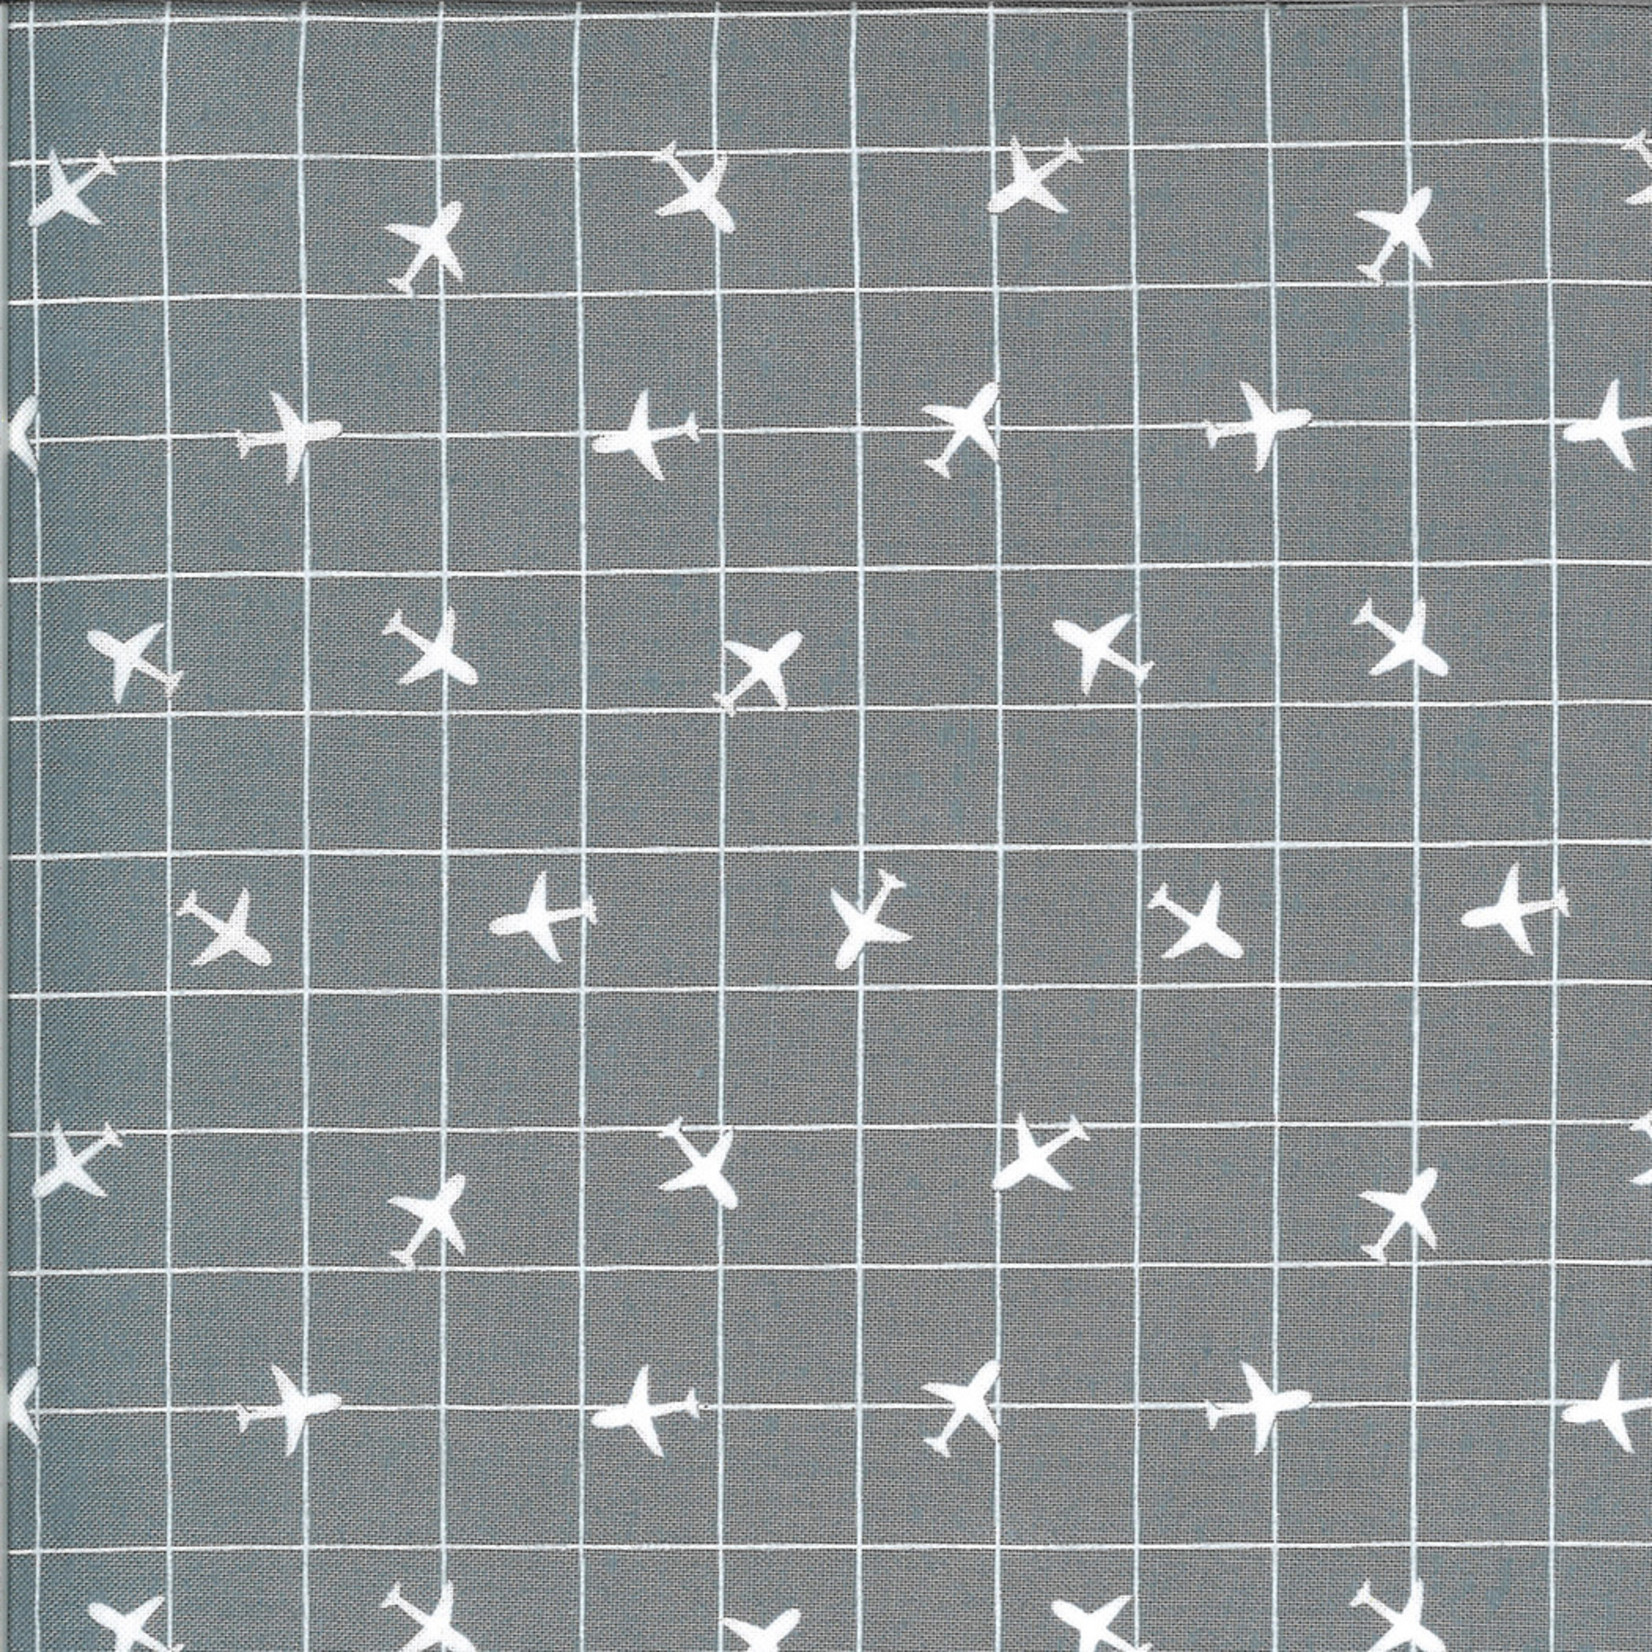 On The Go, Airplane Grid, Steel Grey (20726 19) $0.20 per cm or $20/m